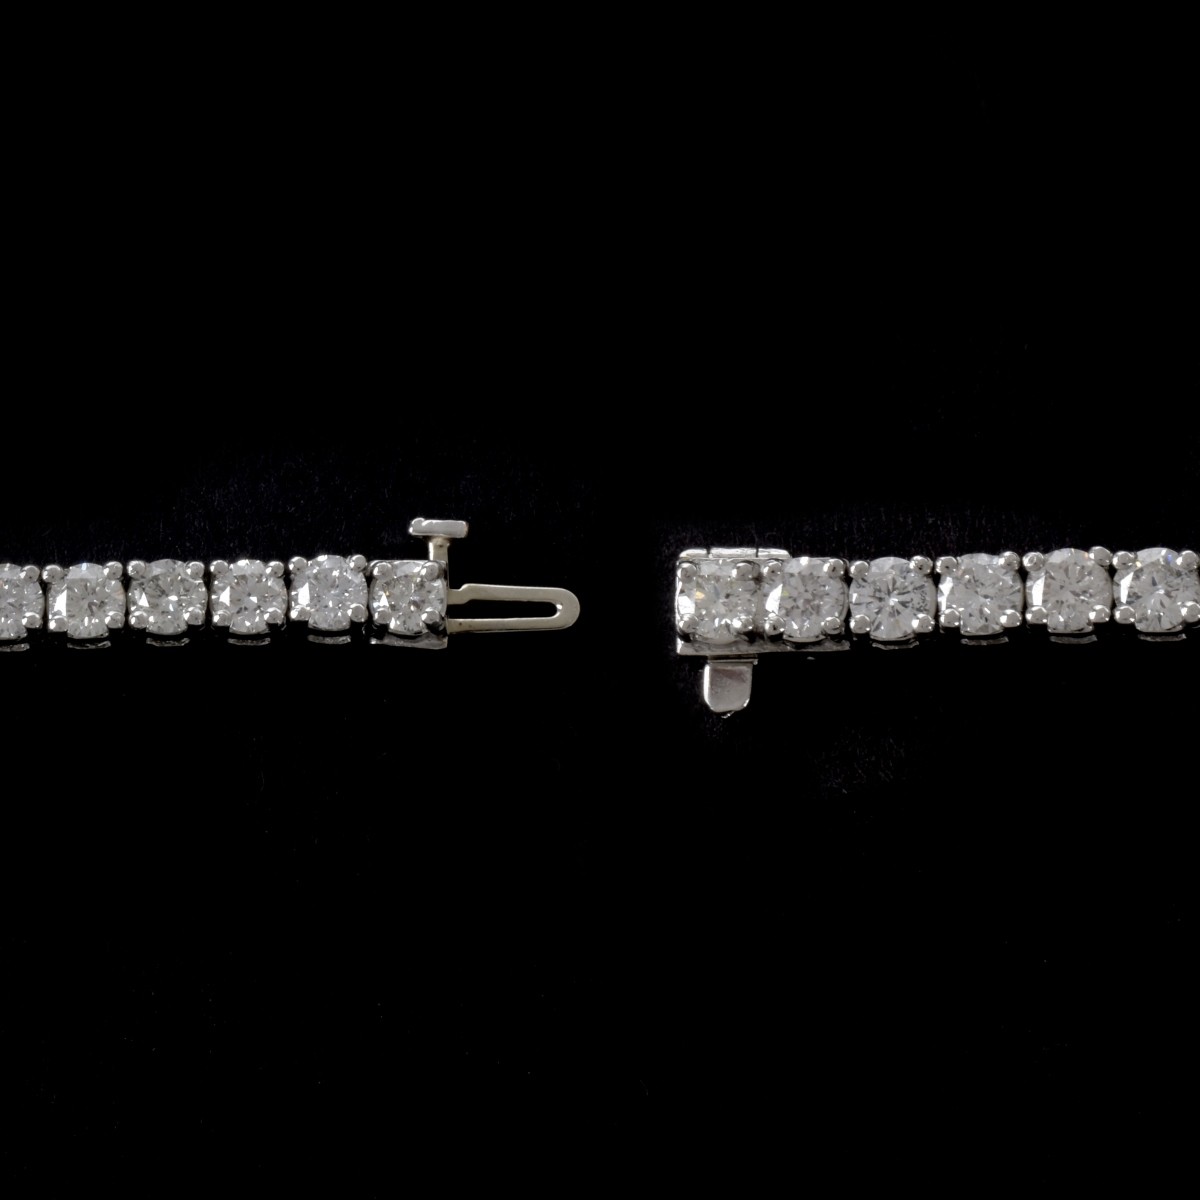 Diamond and Platinum Tennis Bracelet